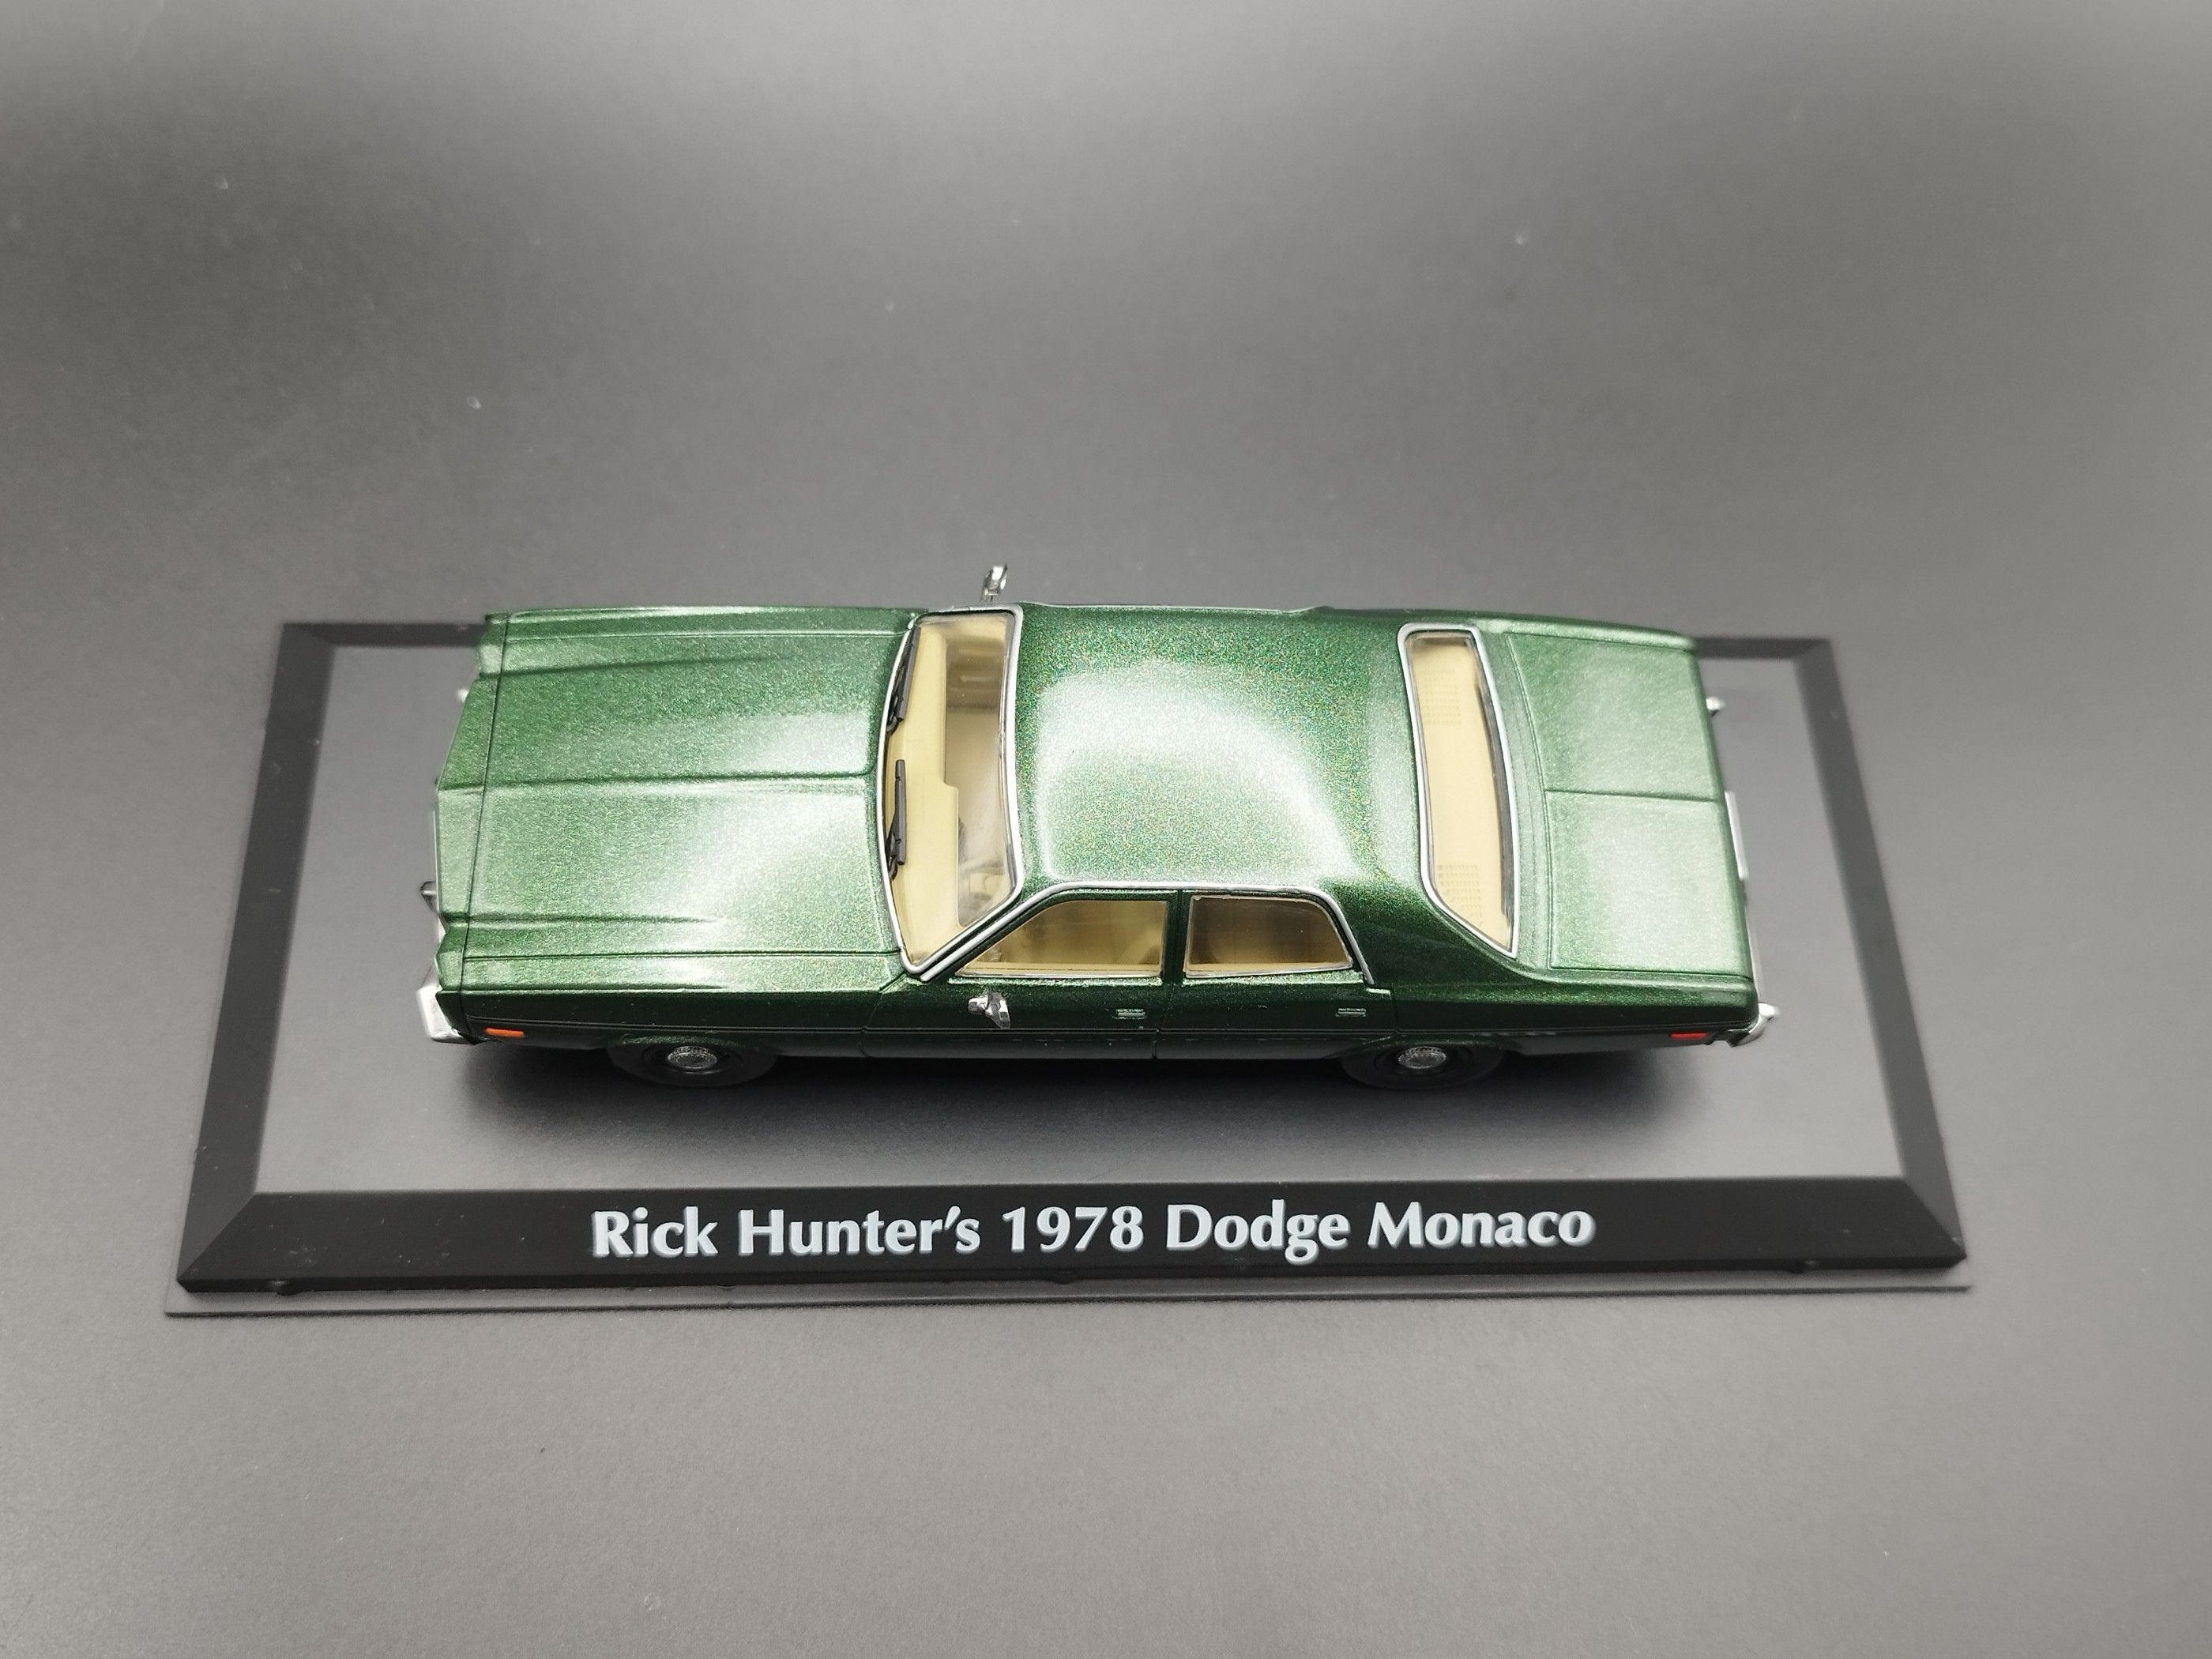 1:43 Greenlight 1977 Dodge Monaco Hunter (1984-91 TV serial) model